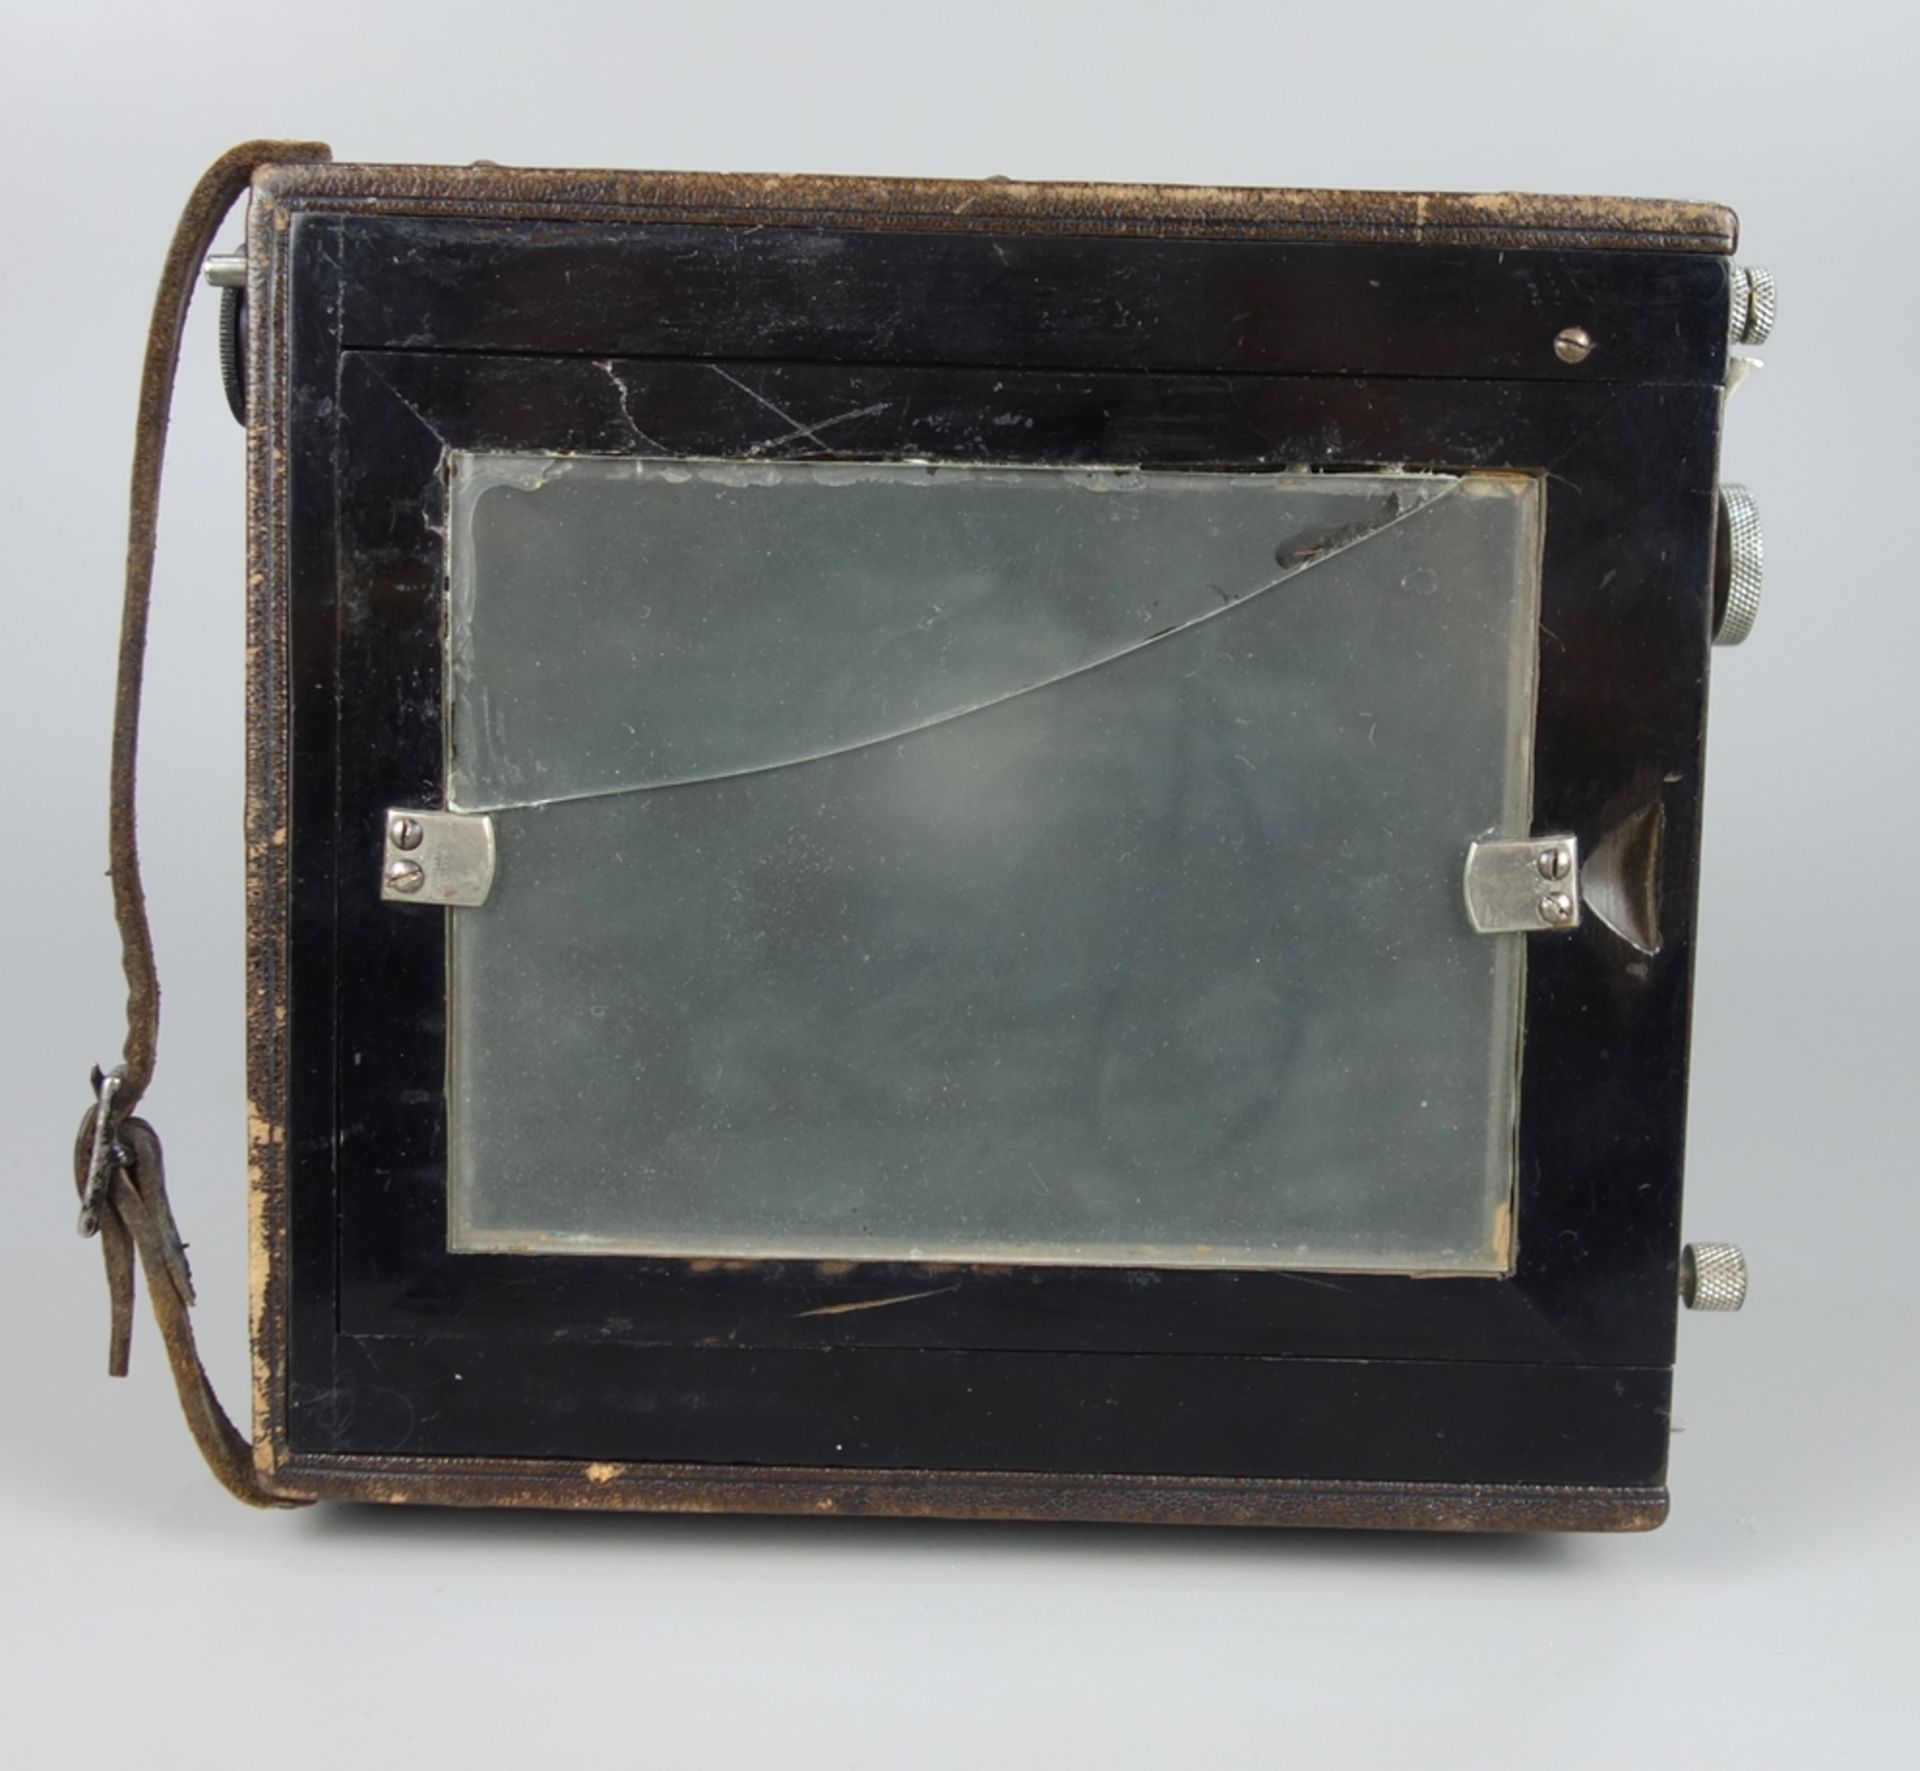 Leather metal folding camera, c. 1905 - Image 4 of 4